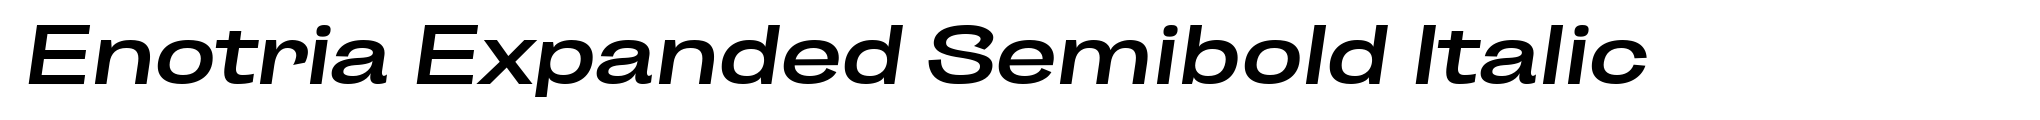 Enotria Expanded Semibold Italic image